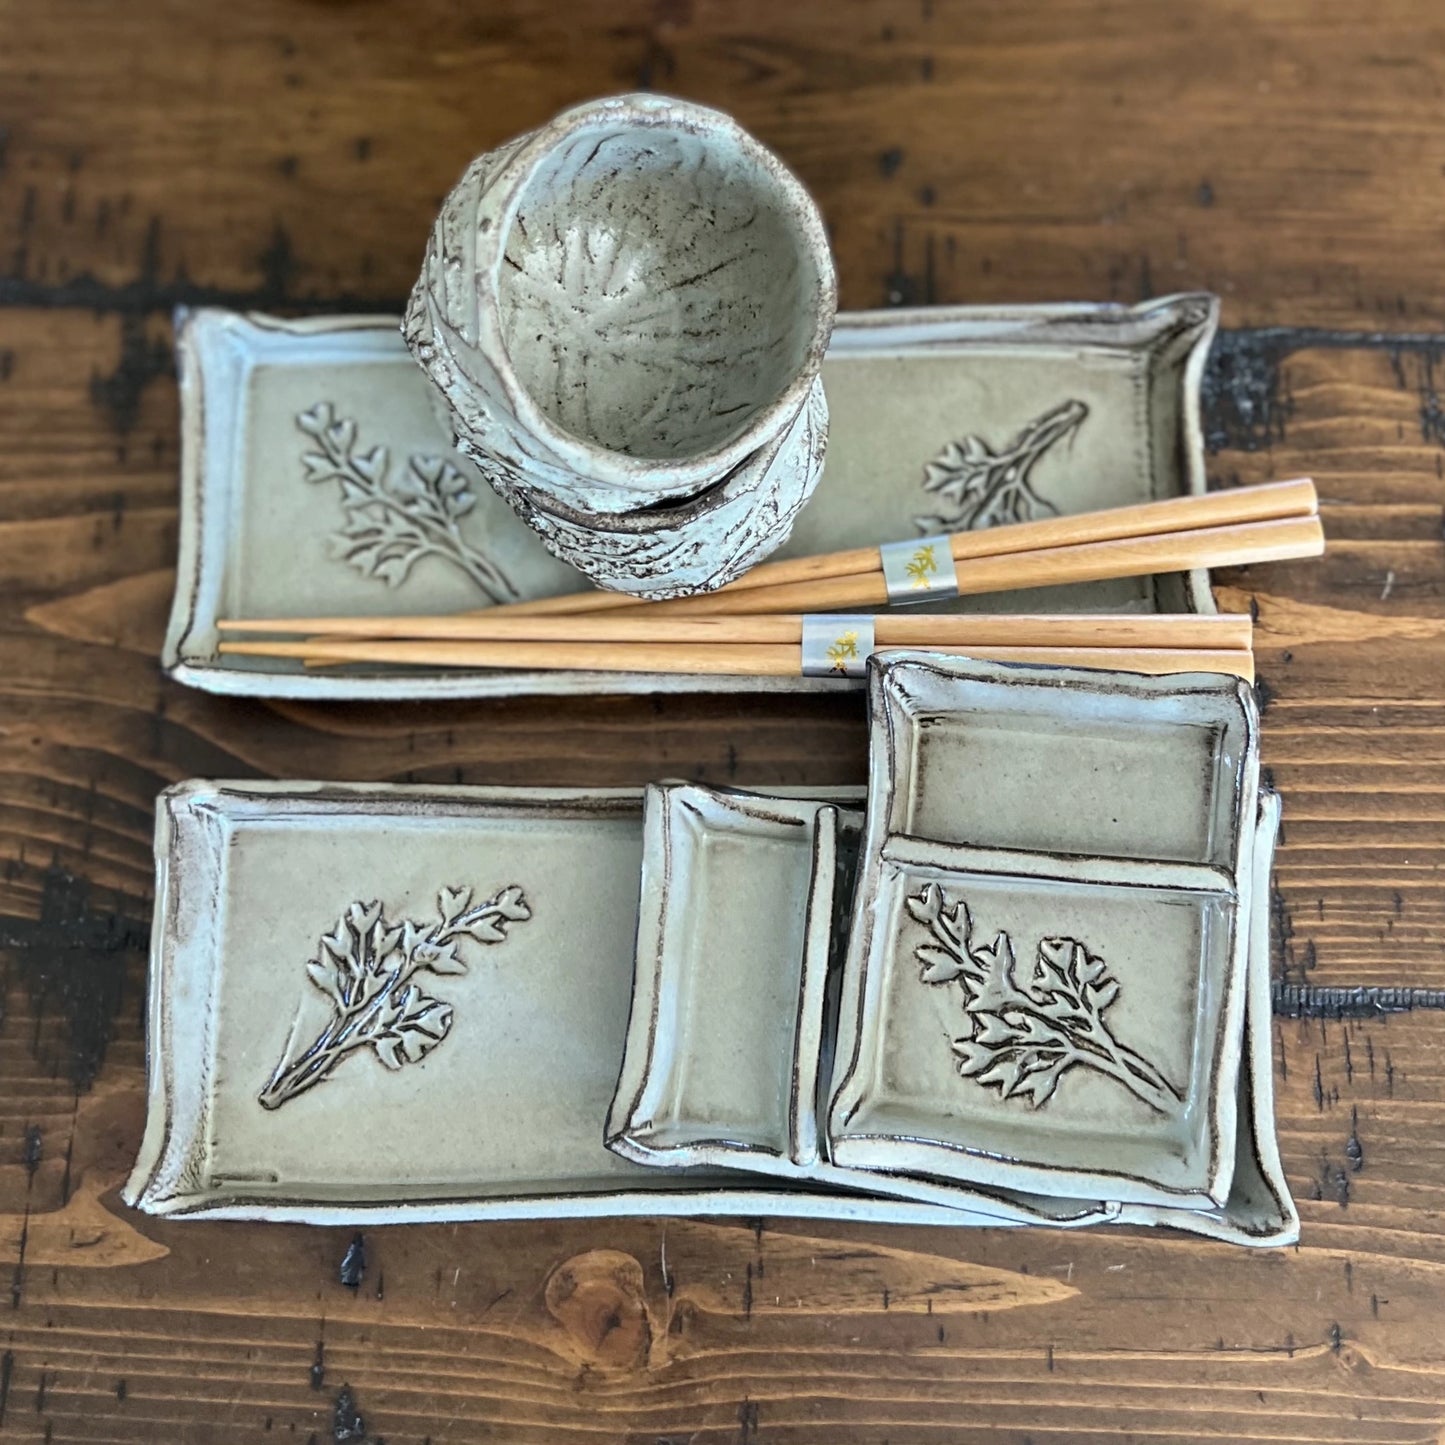 6 piece black ceramic sushi set with botanical stamp glazed in silver gray including kurinuki cup set and chopsticks 